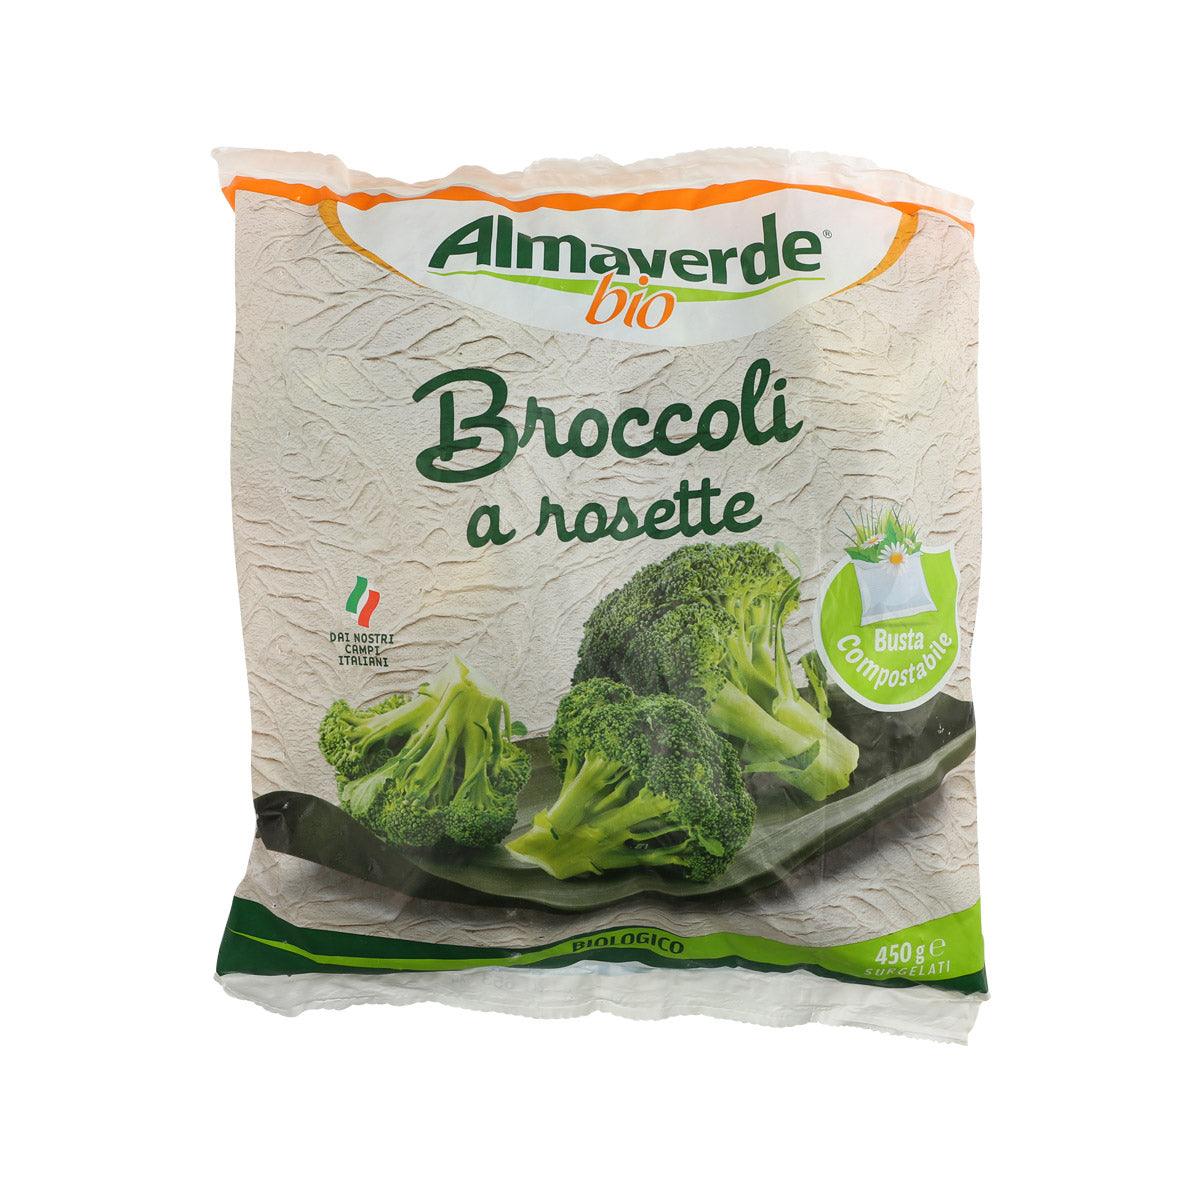 ALMAVERDE BIO Organic – Broccoli E-Shop city\'super Florets (450g)